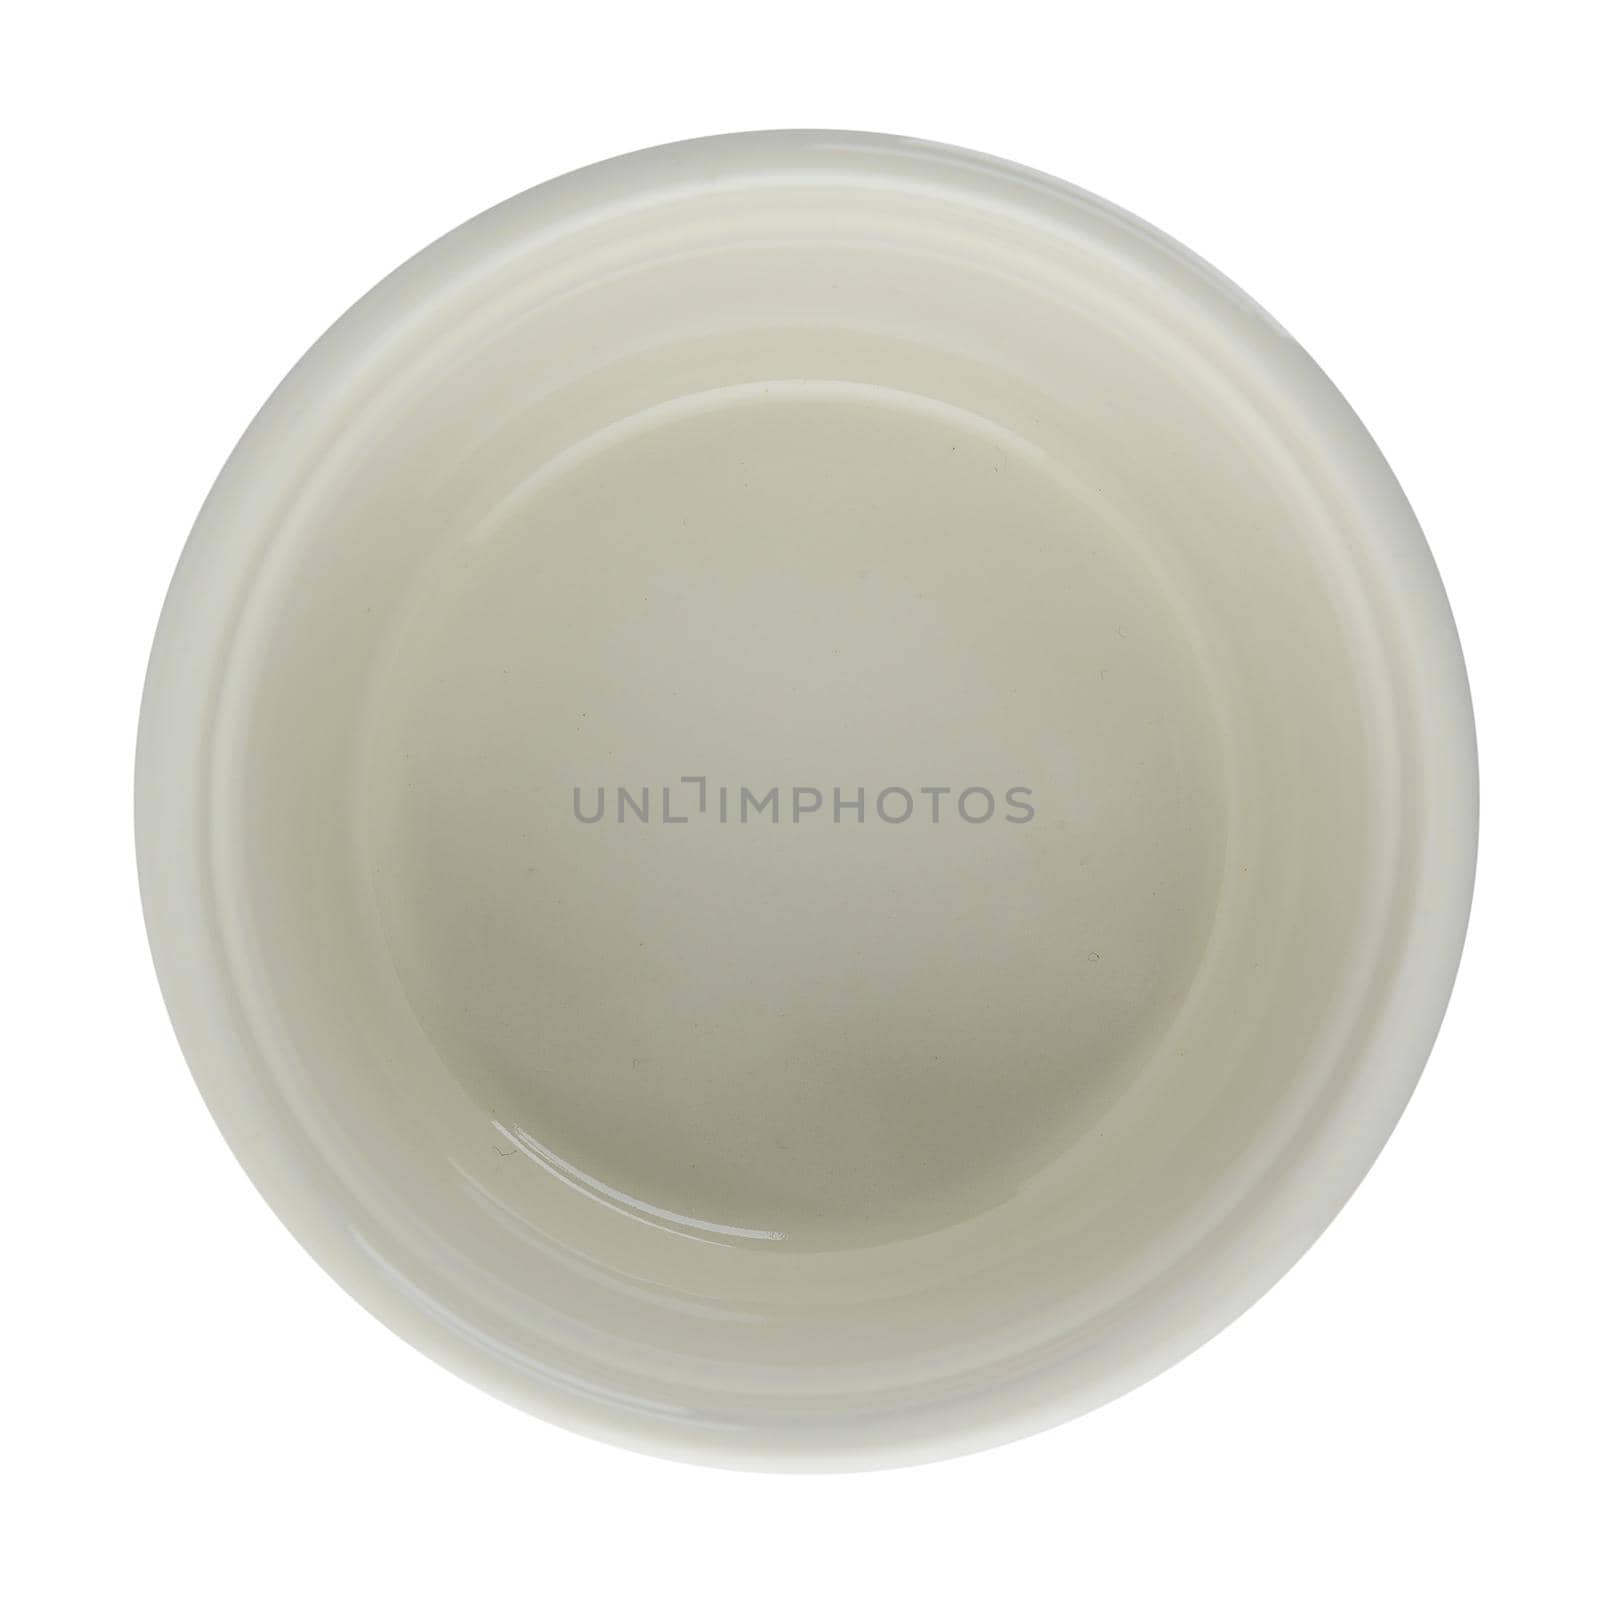 White ceramic bowl on white reflective background